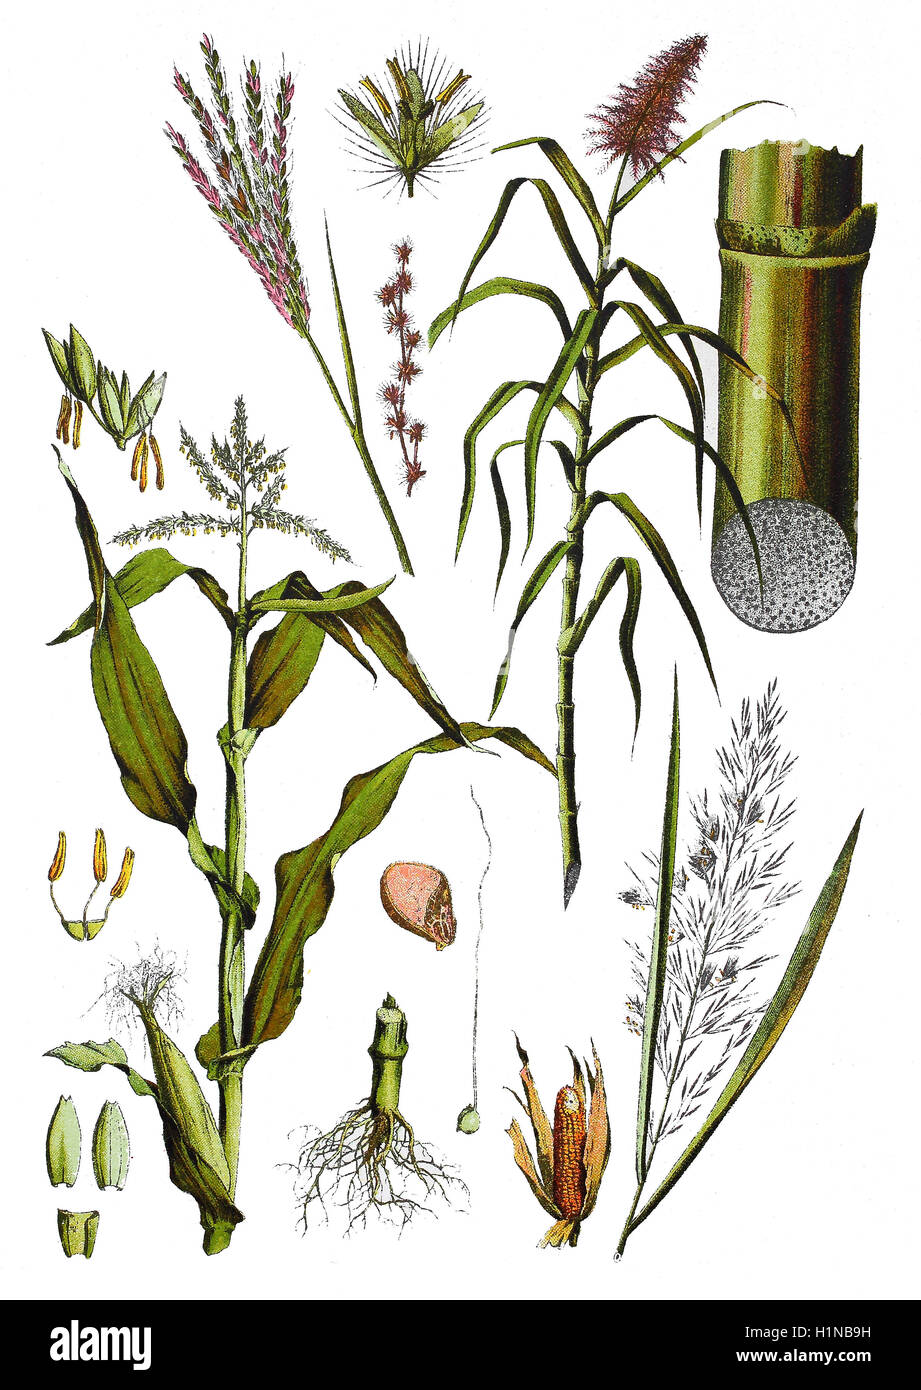 Saccharum officinarum рисунок